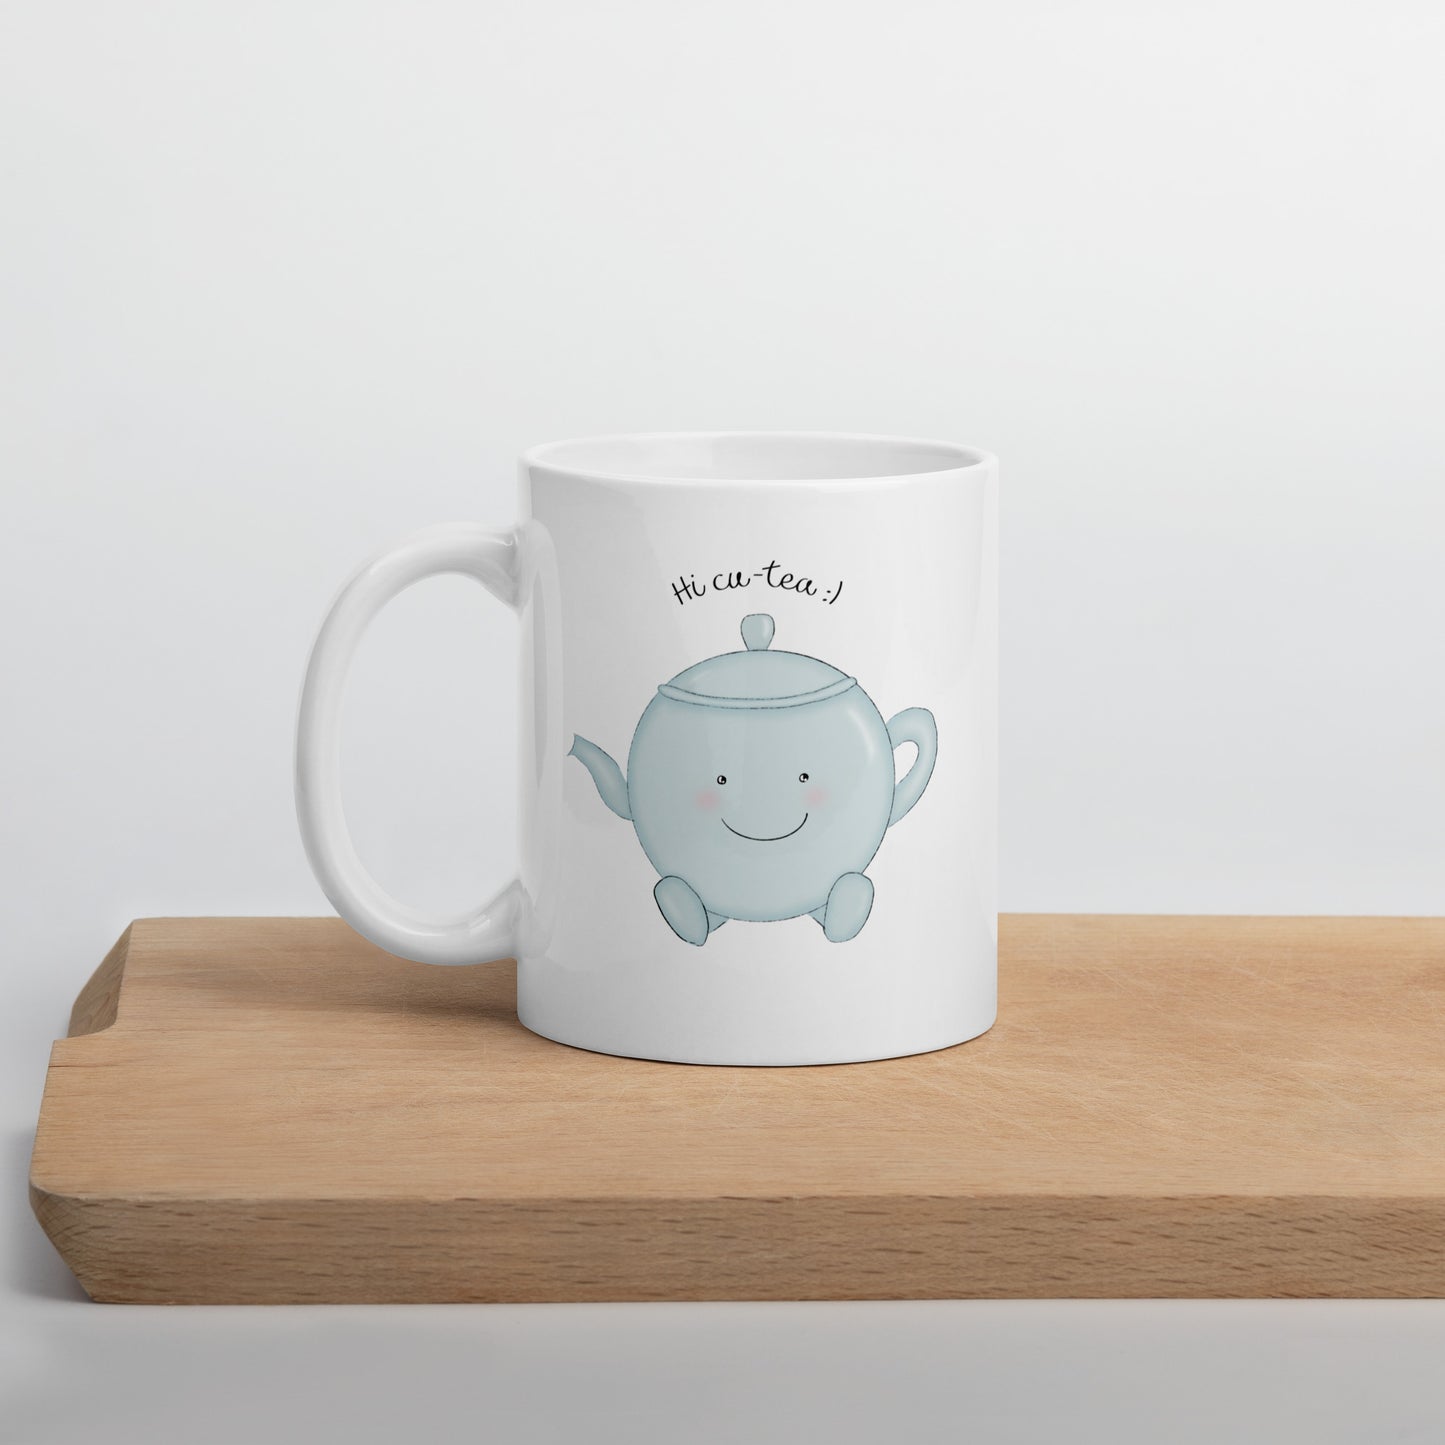 Hi Cu-tea Mug